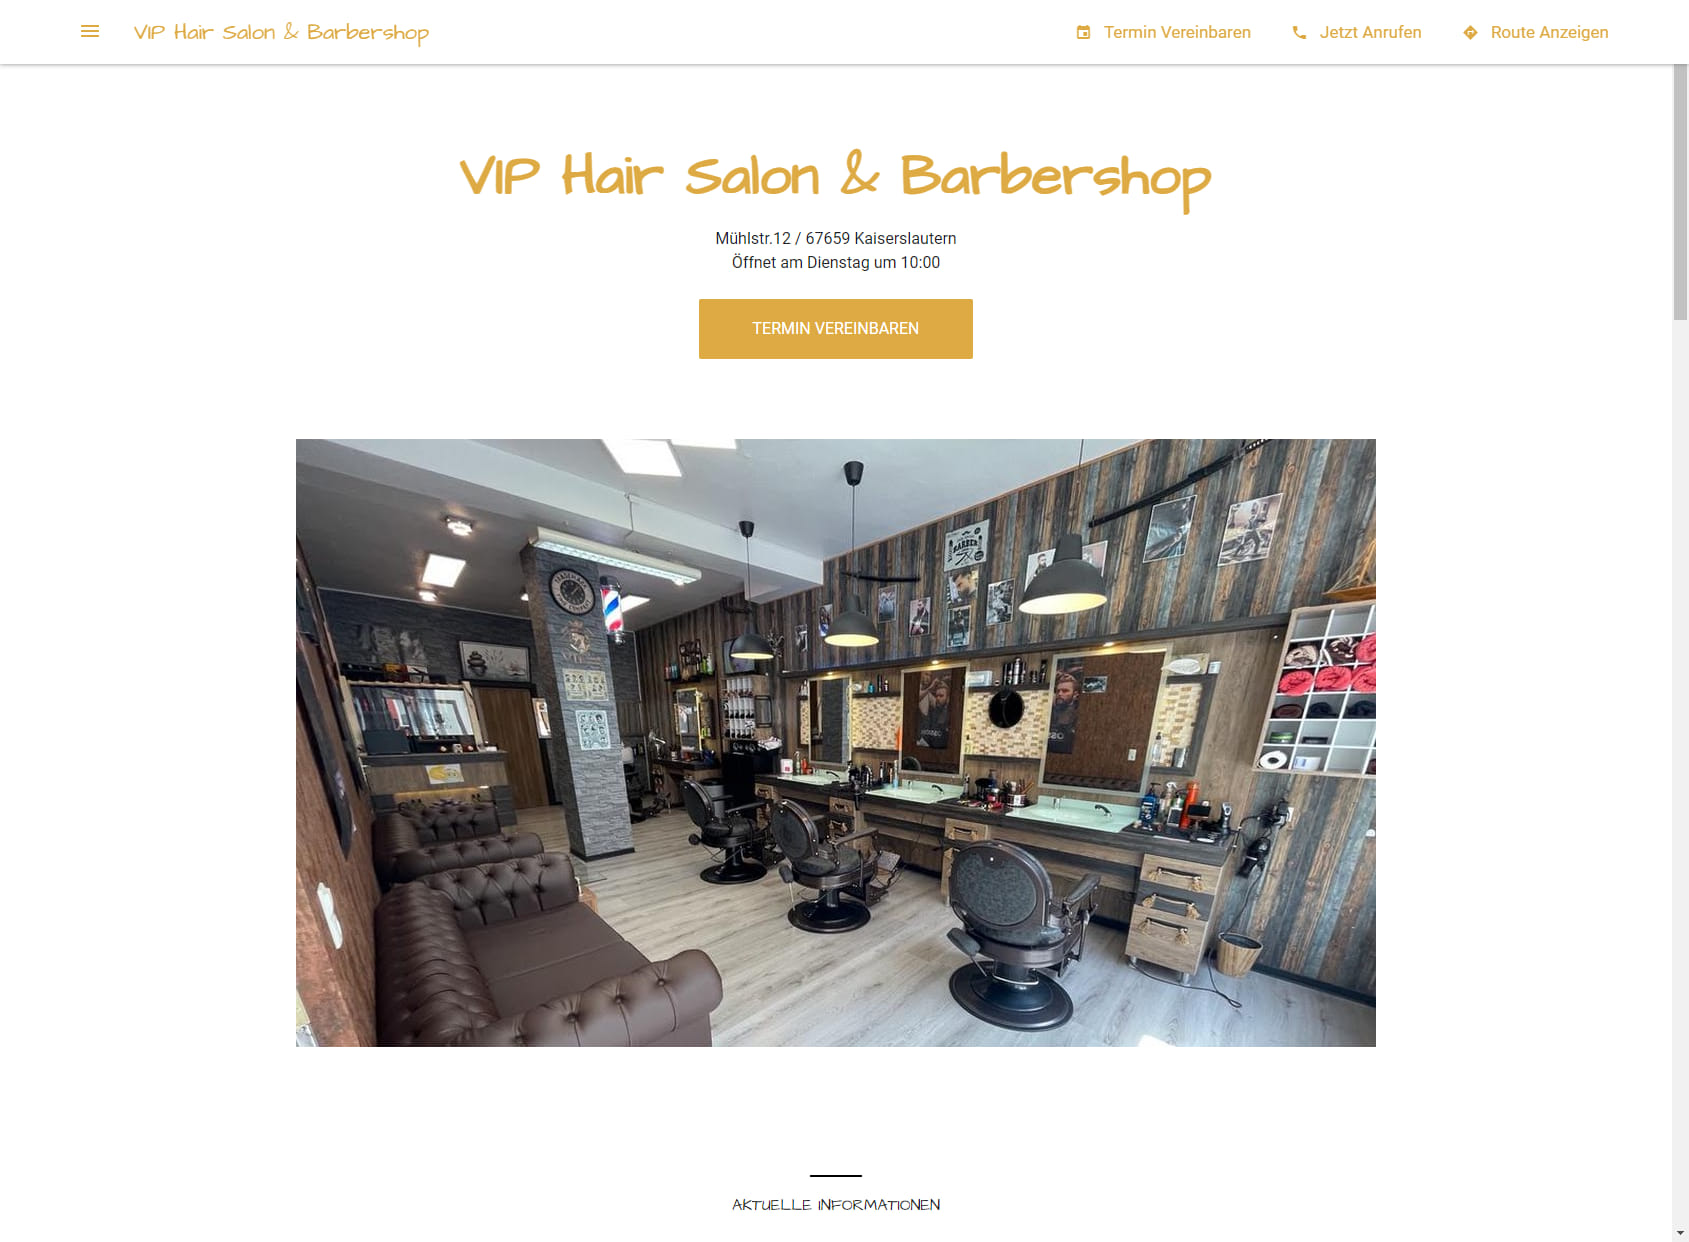 VIP Hair Salon & Barbershop